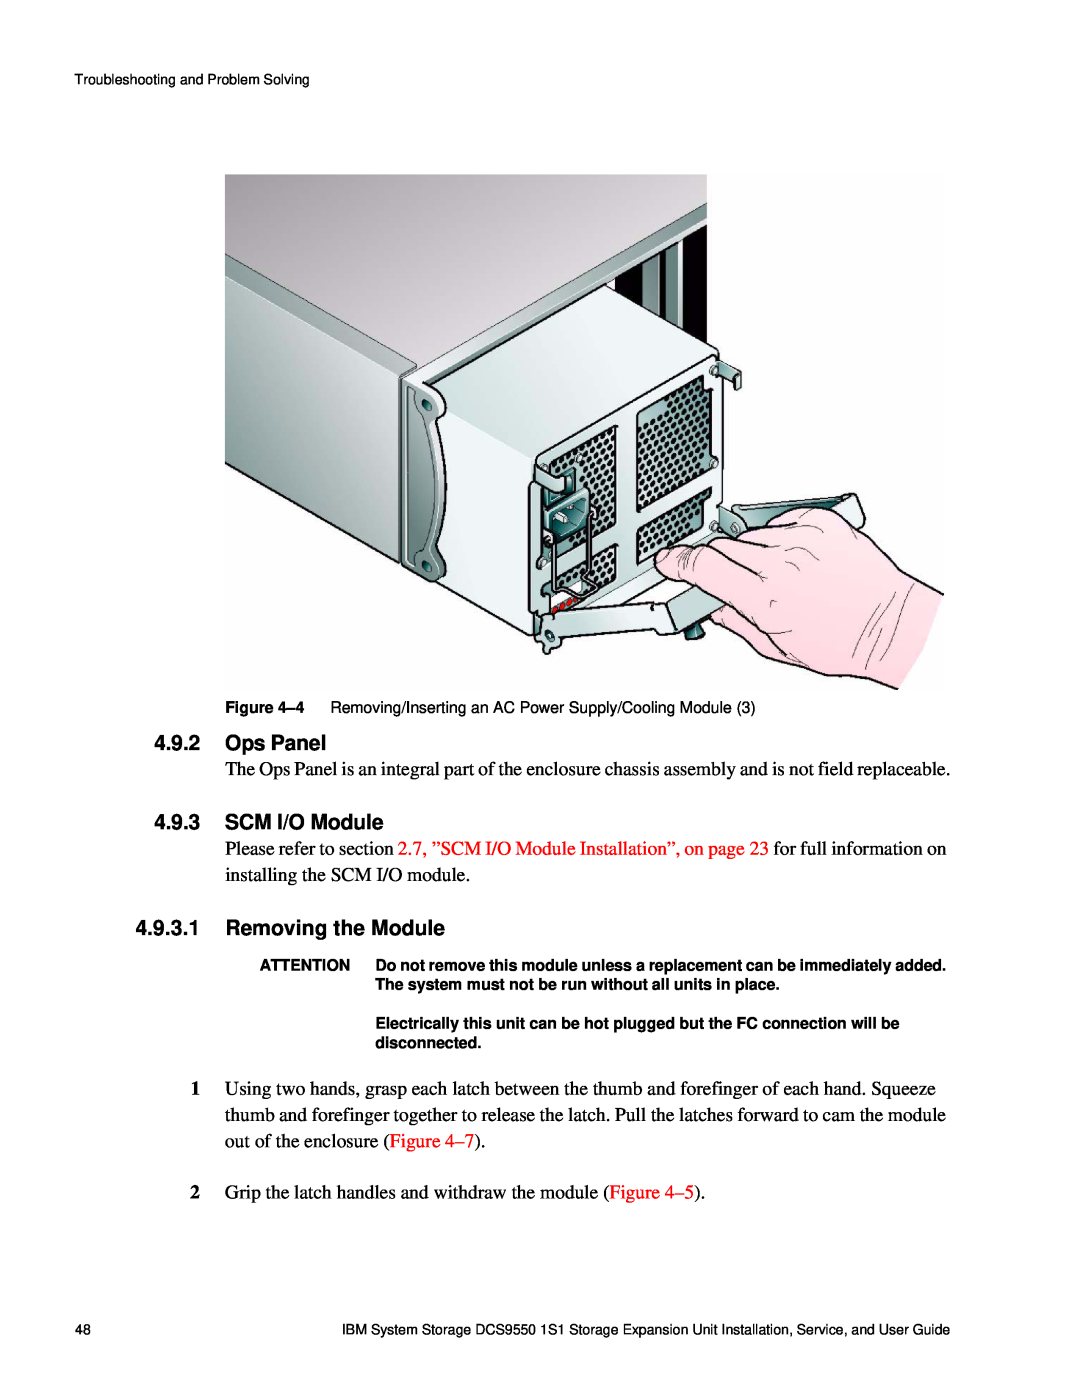 IBM DCS9550 1S1 manual Ops Panel, SCM I/O Module, Removing the Module 